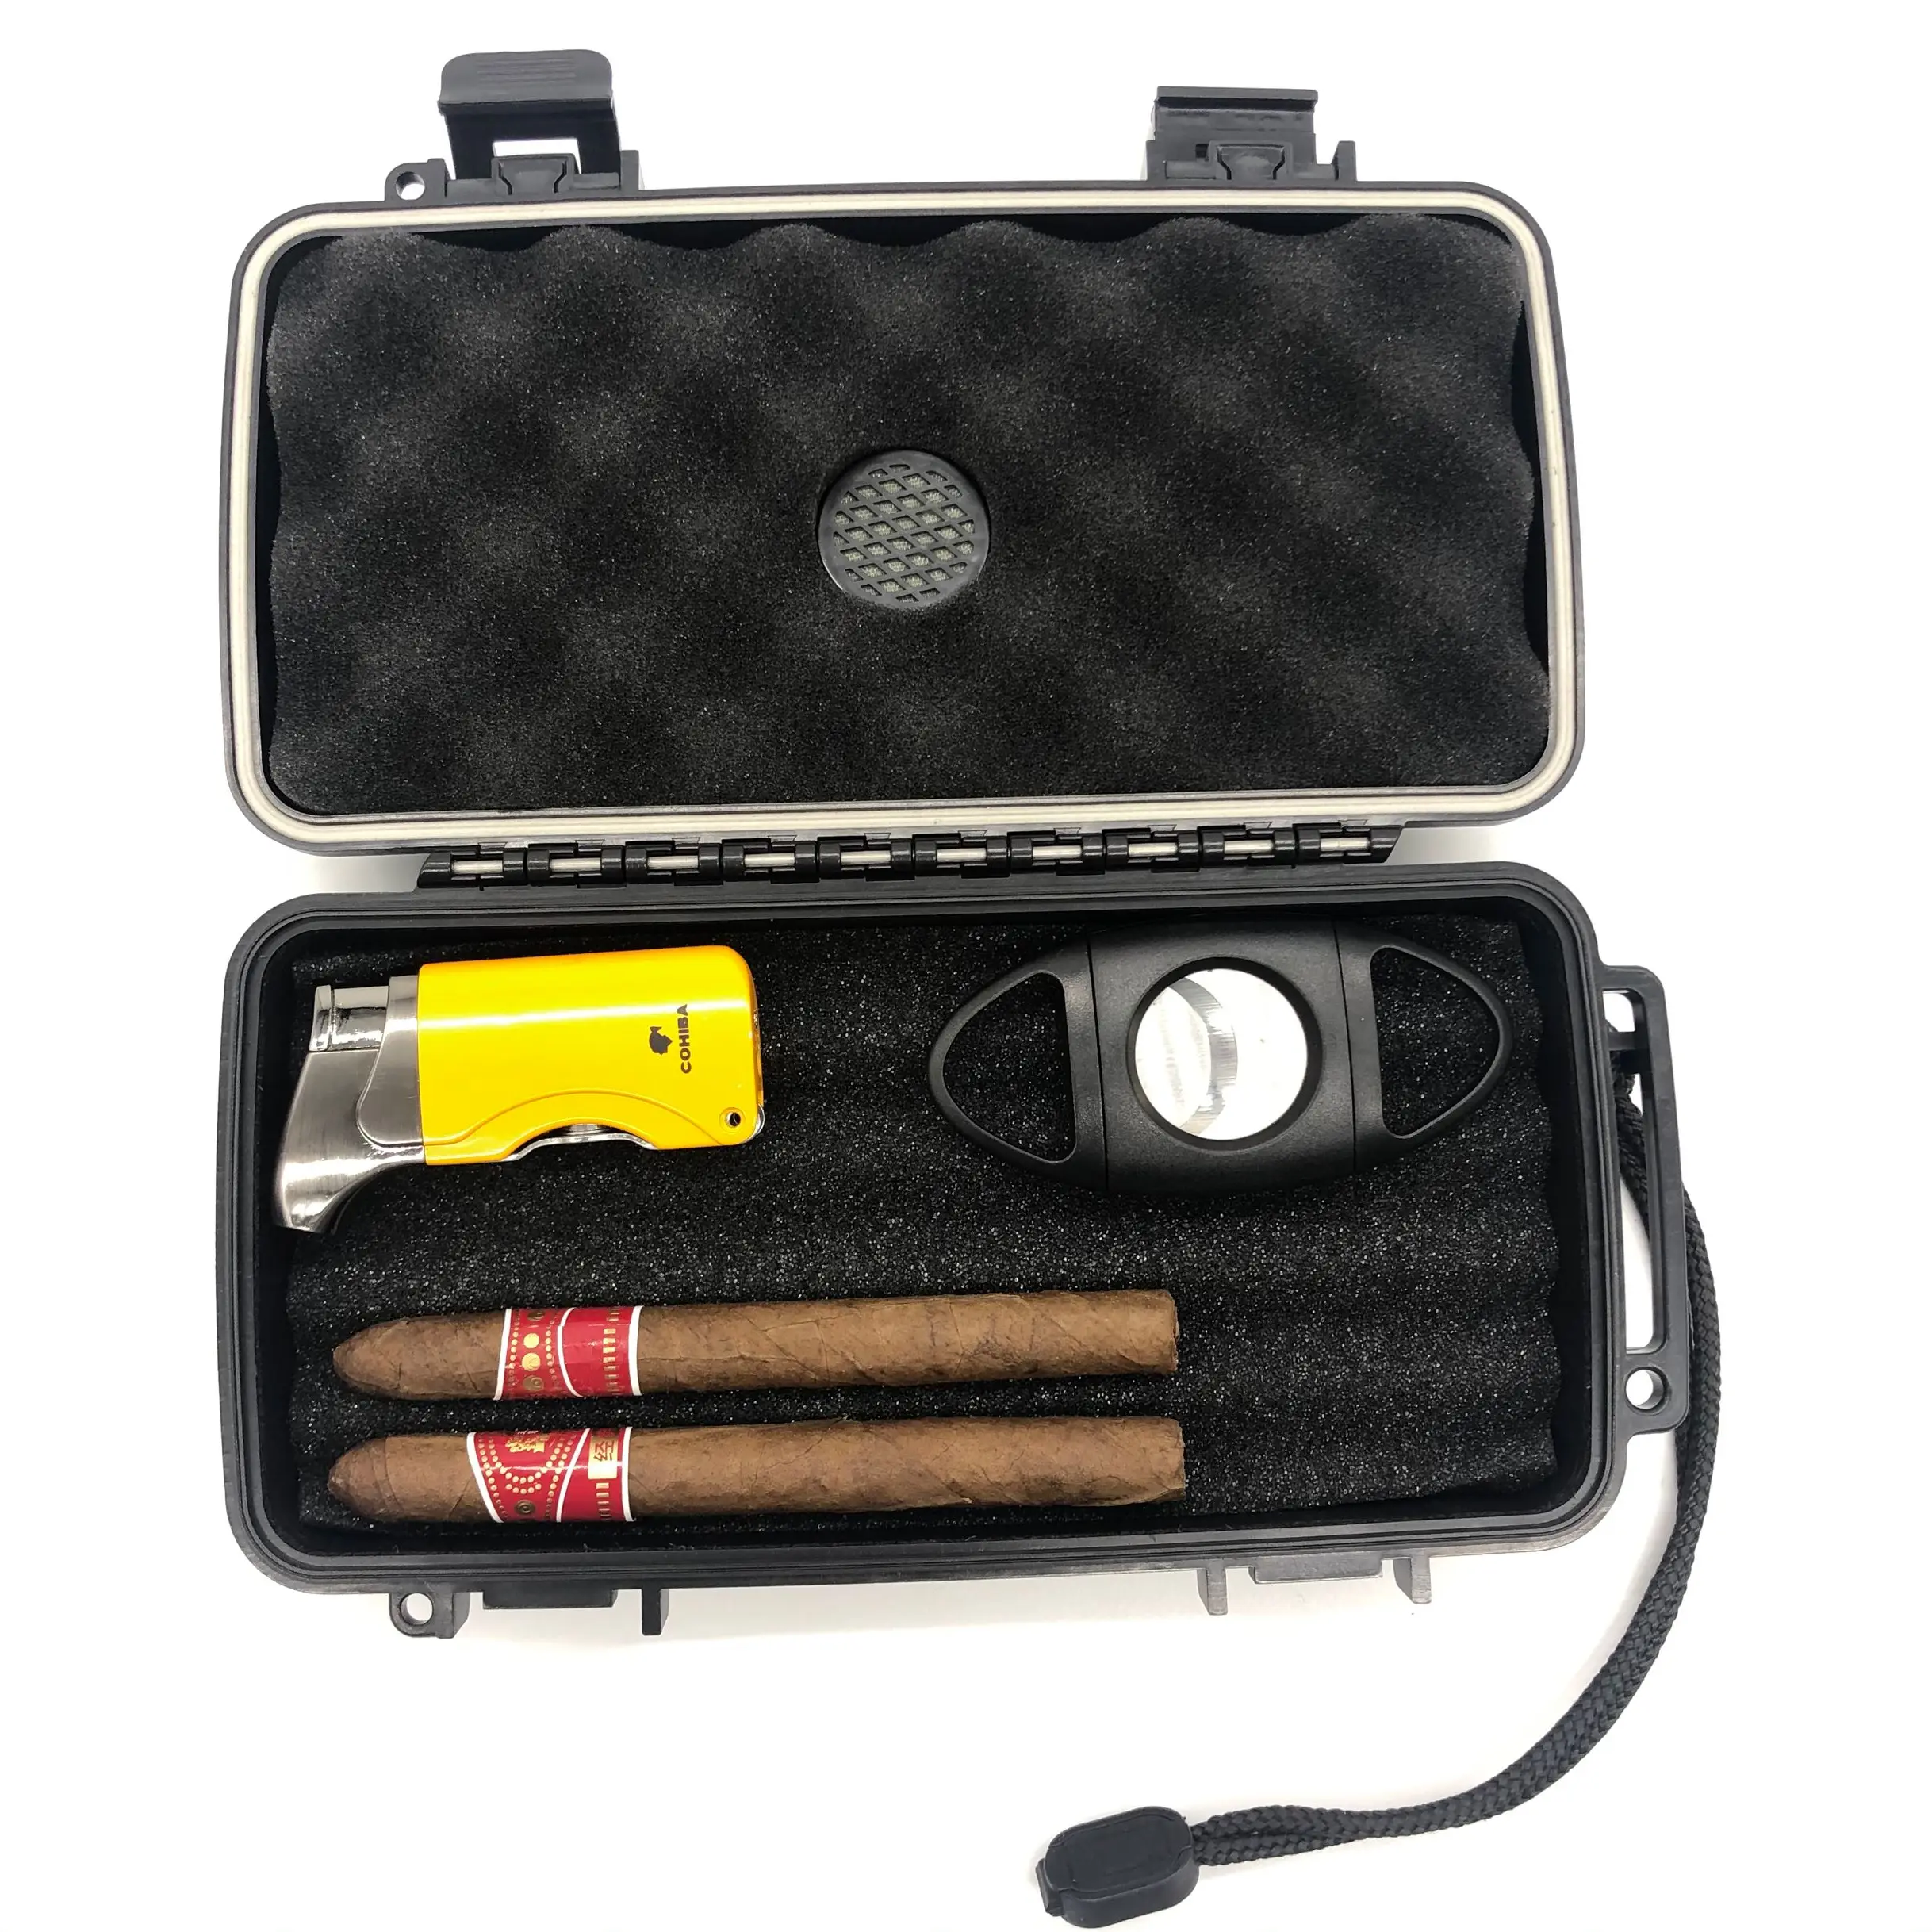 
Cigar humidos Cigars brands cigarette Cigar gift case 